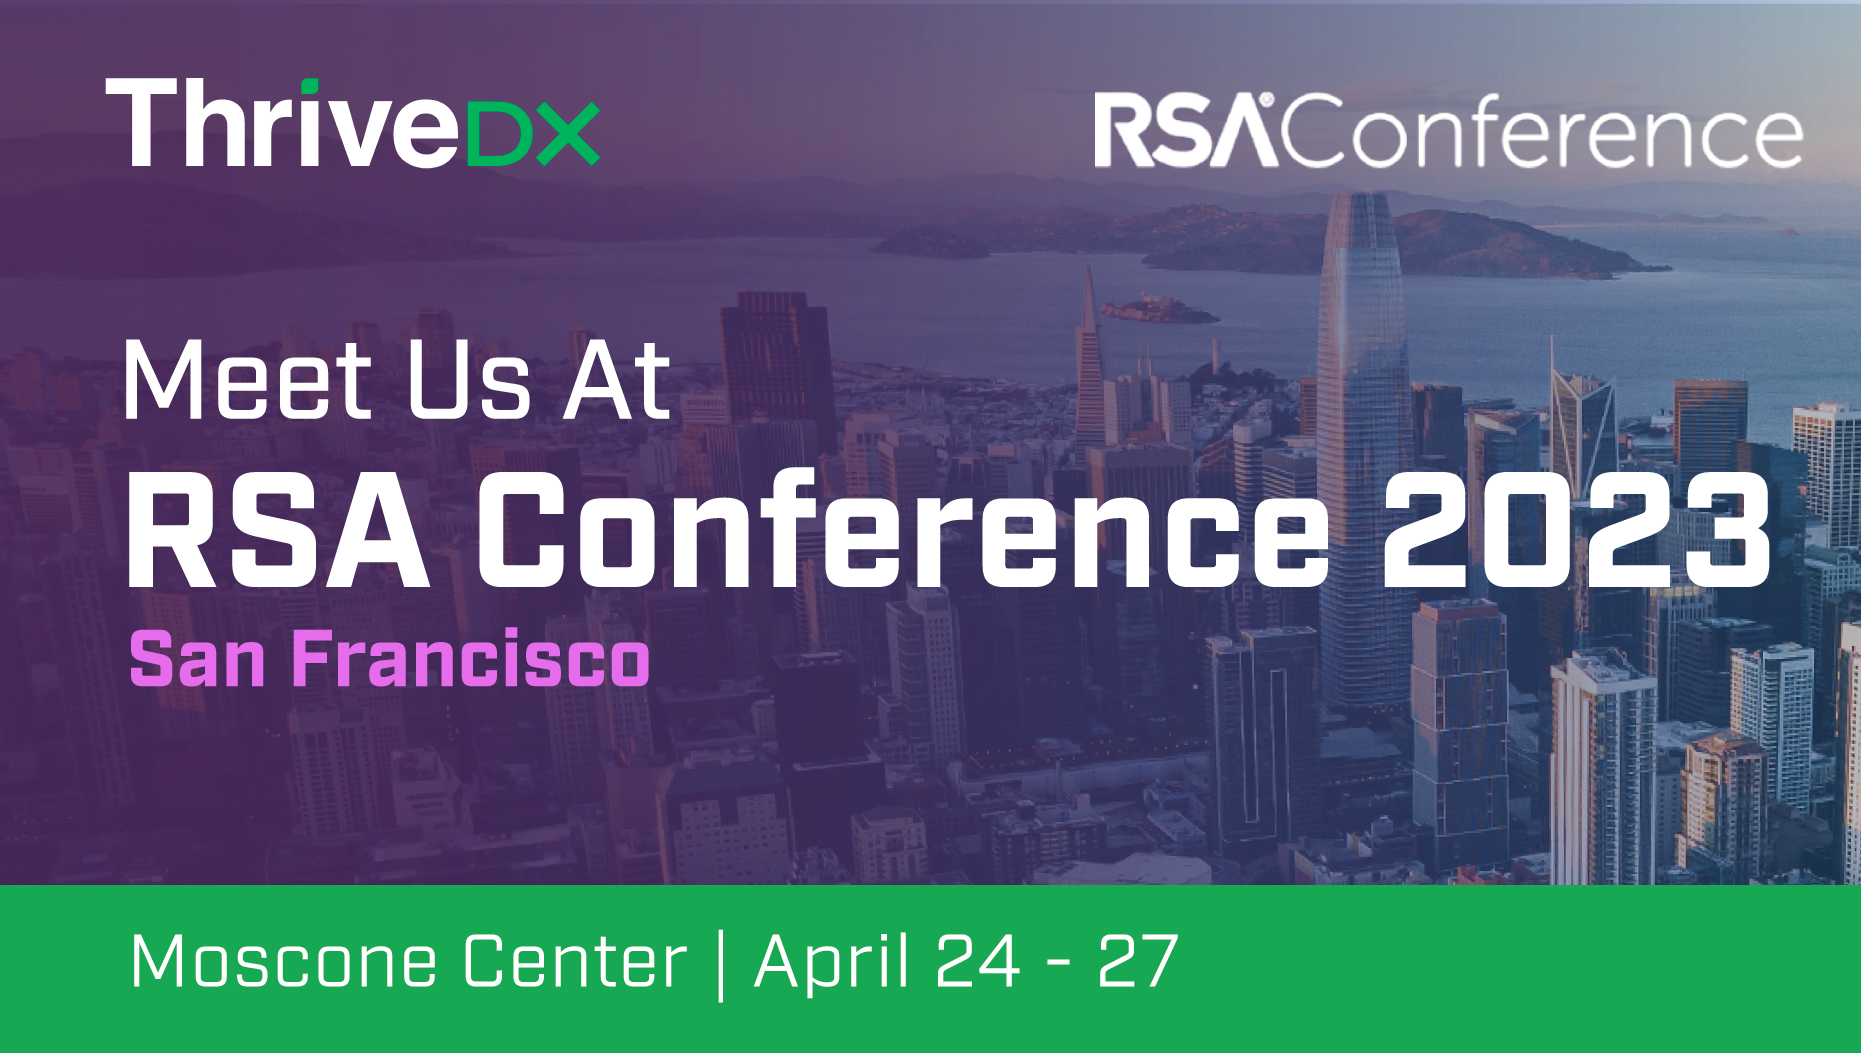 RSA Conference 2023 - ThriveDX